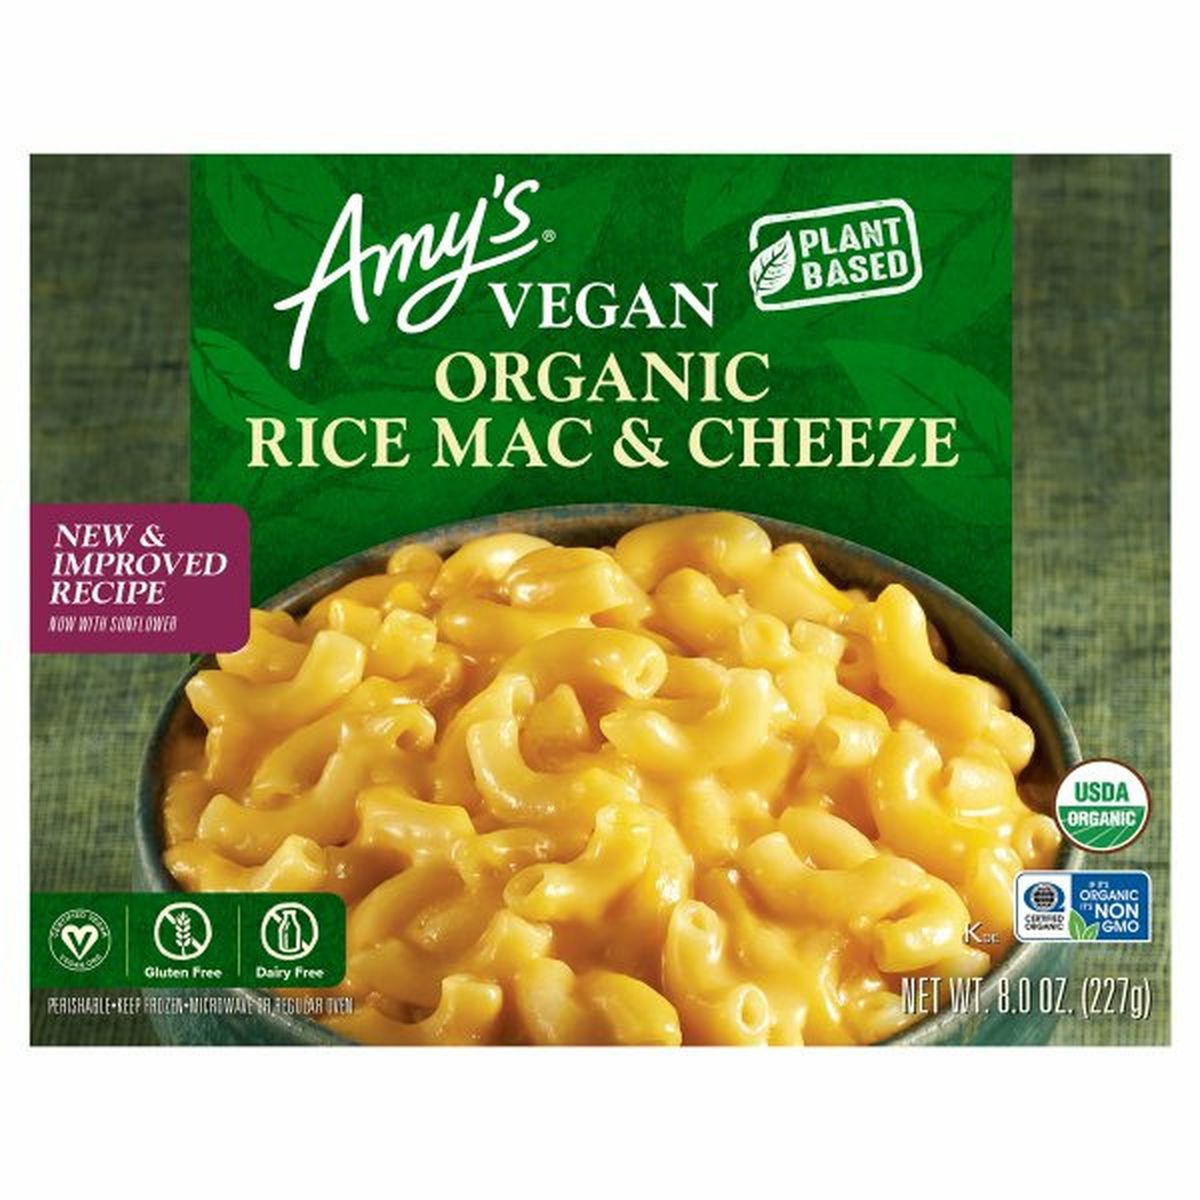 Calories in Amy's Kitchen Vegan Rice Mac & Cheeze, Organic